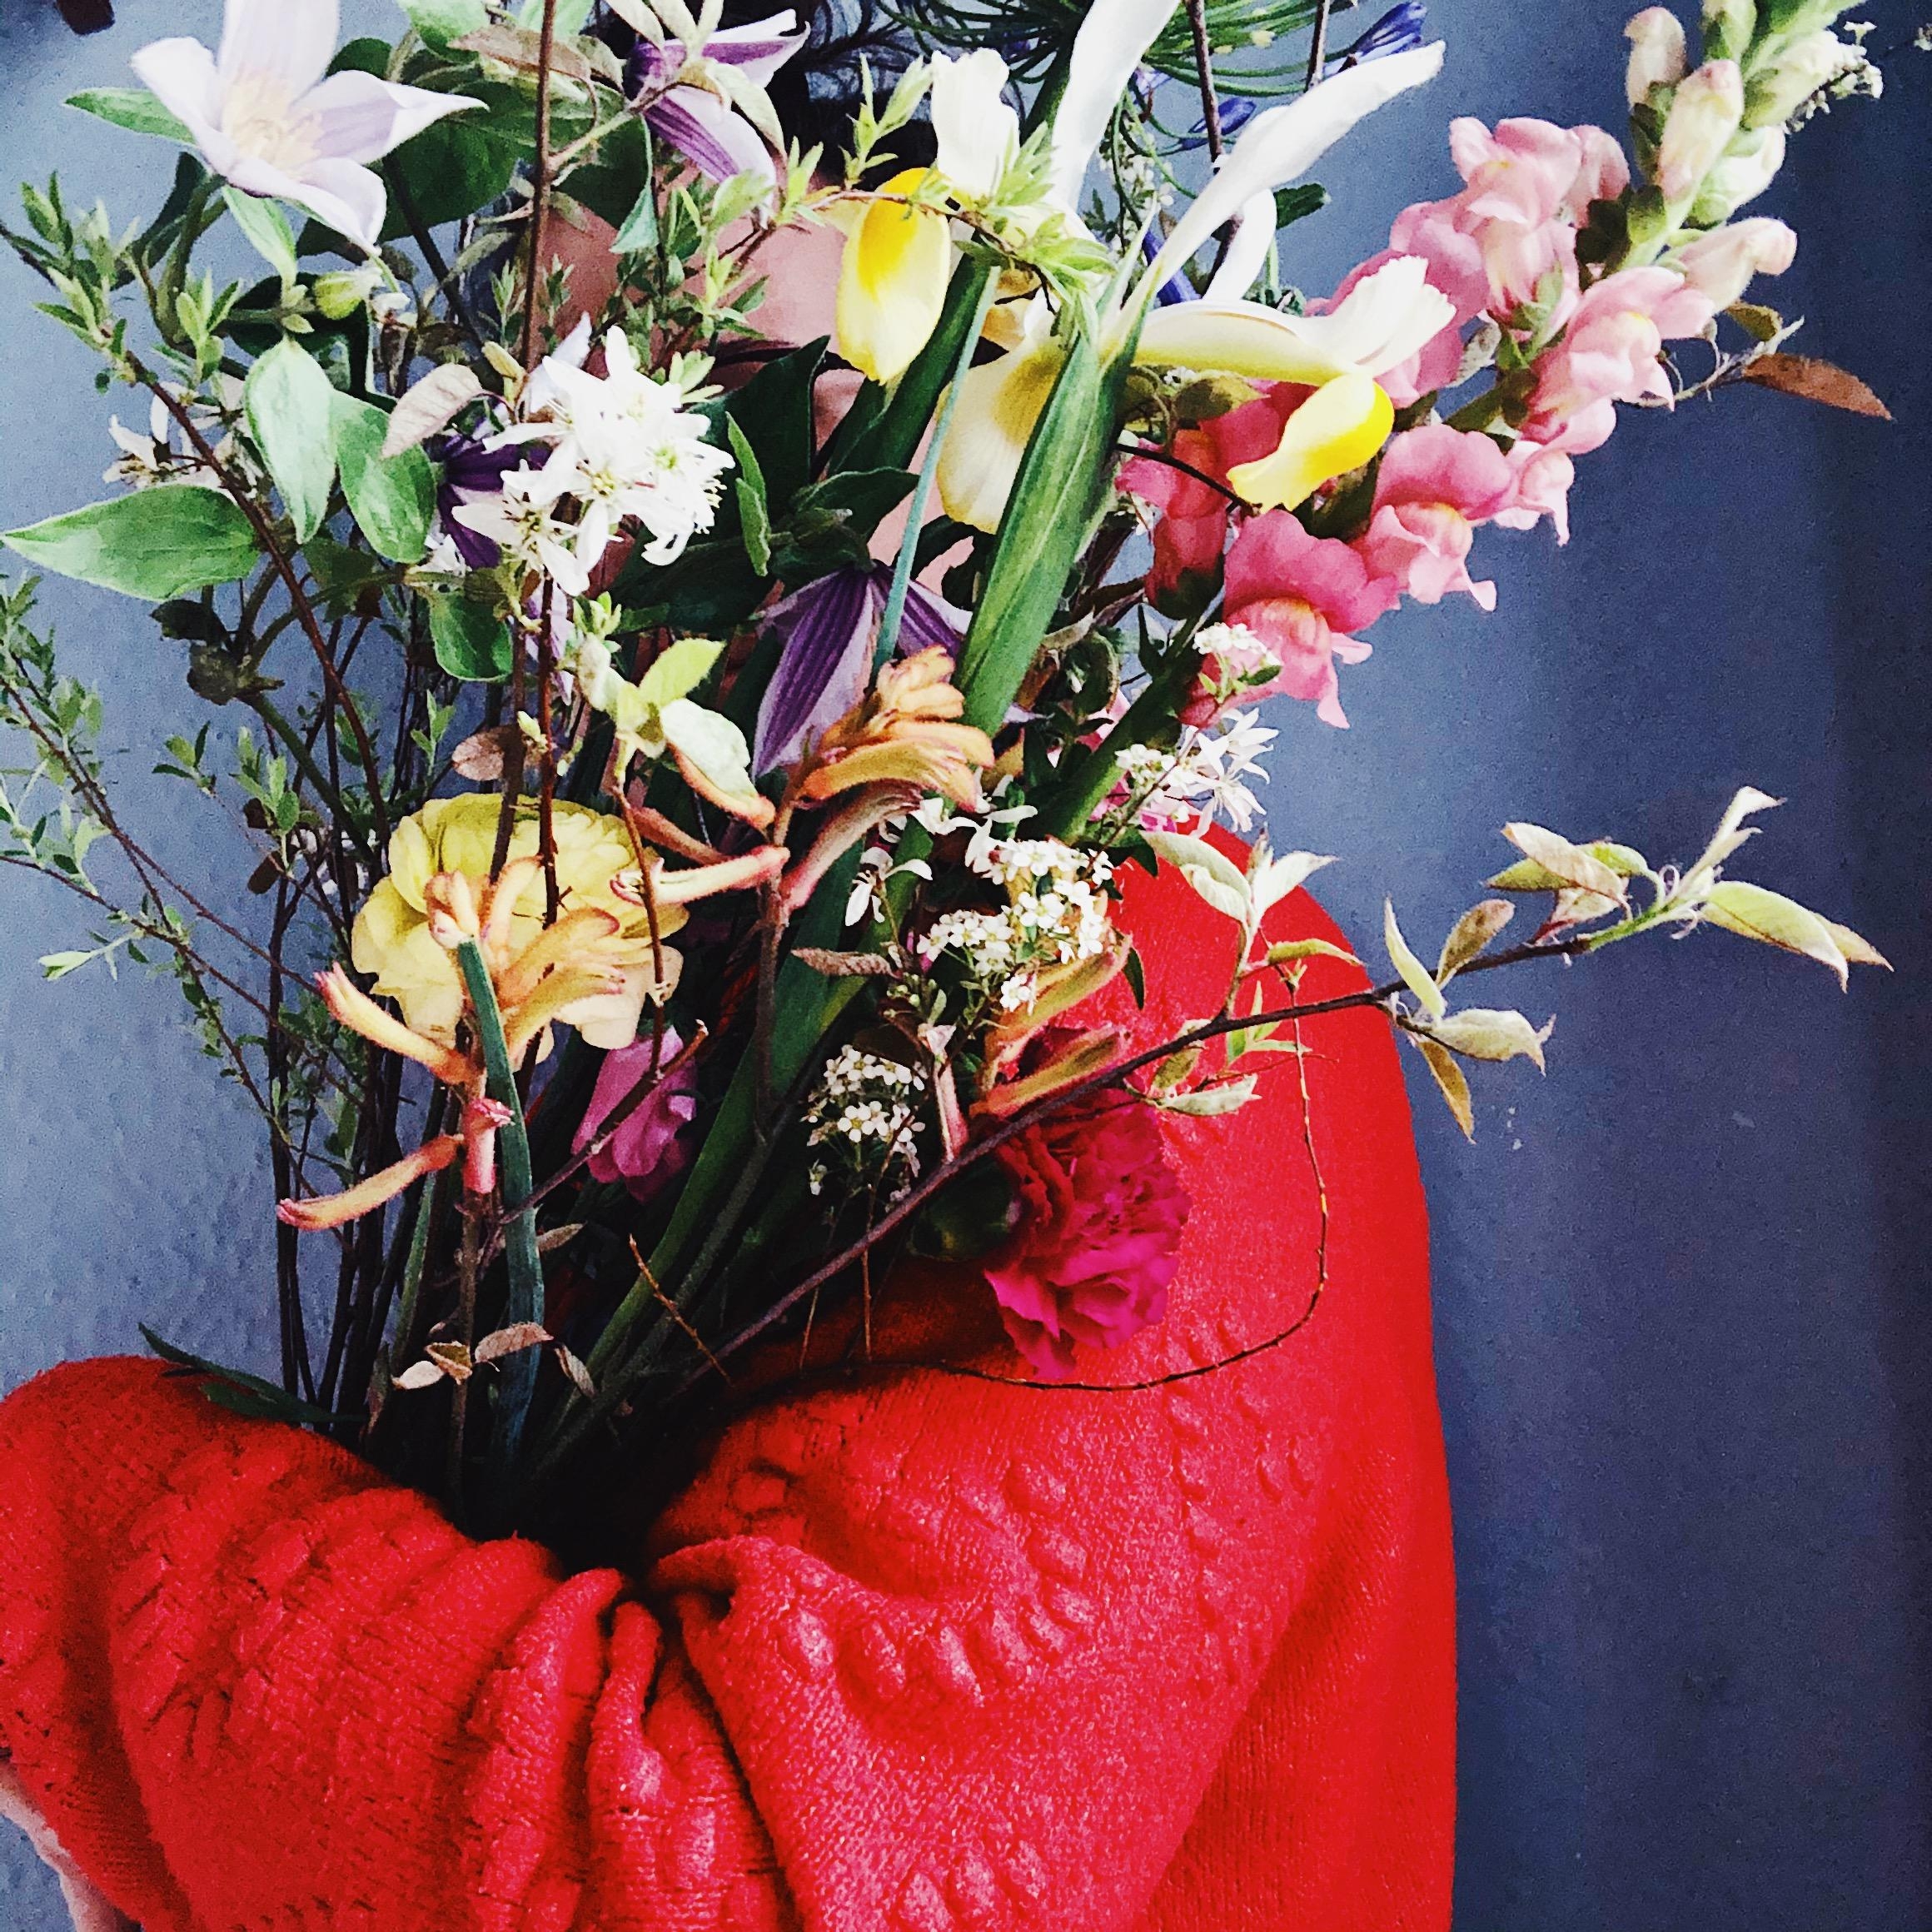 An arm full of flowers 🌺 
#detailverliebt #Blumen #Blumenliebe